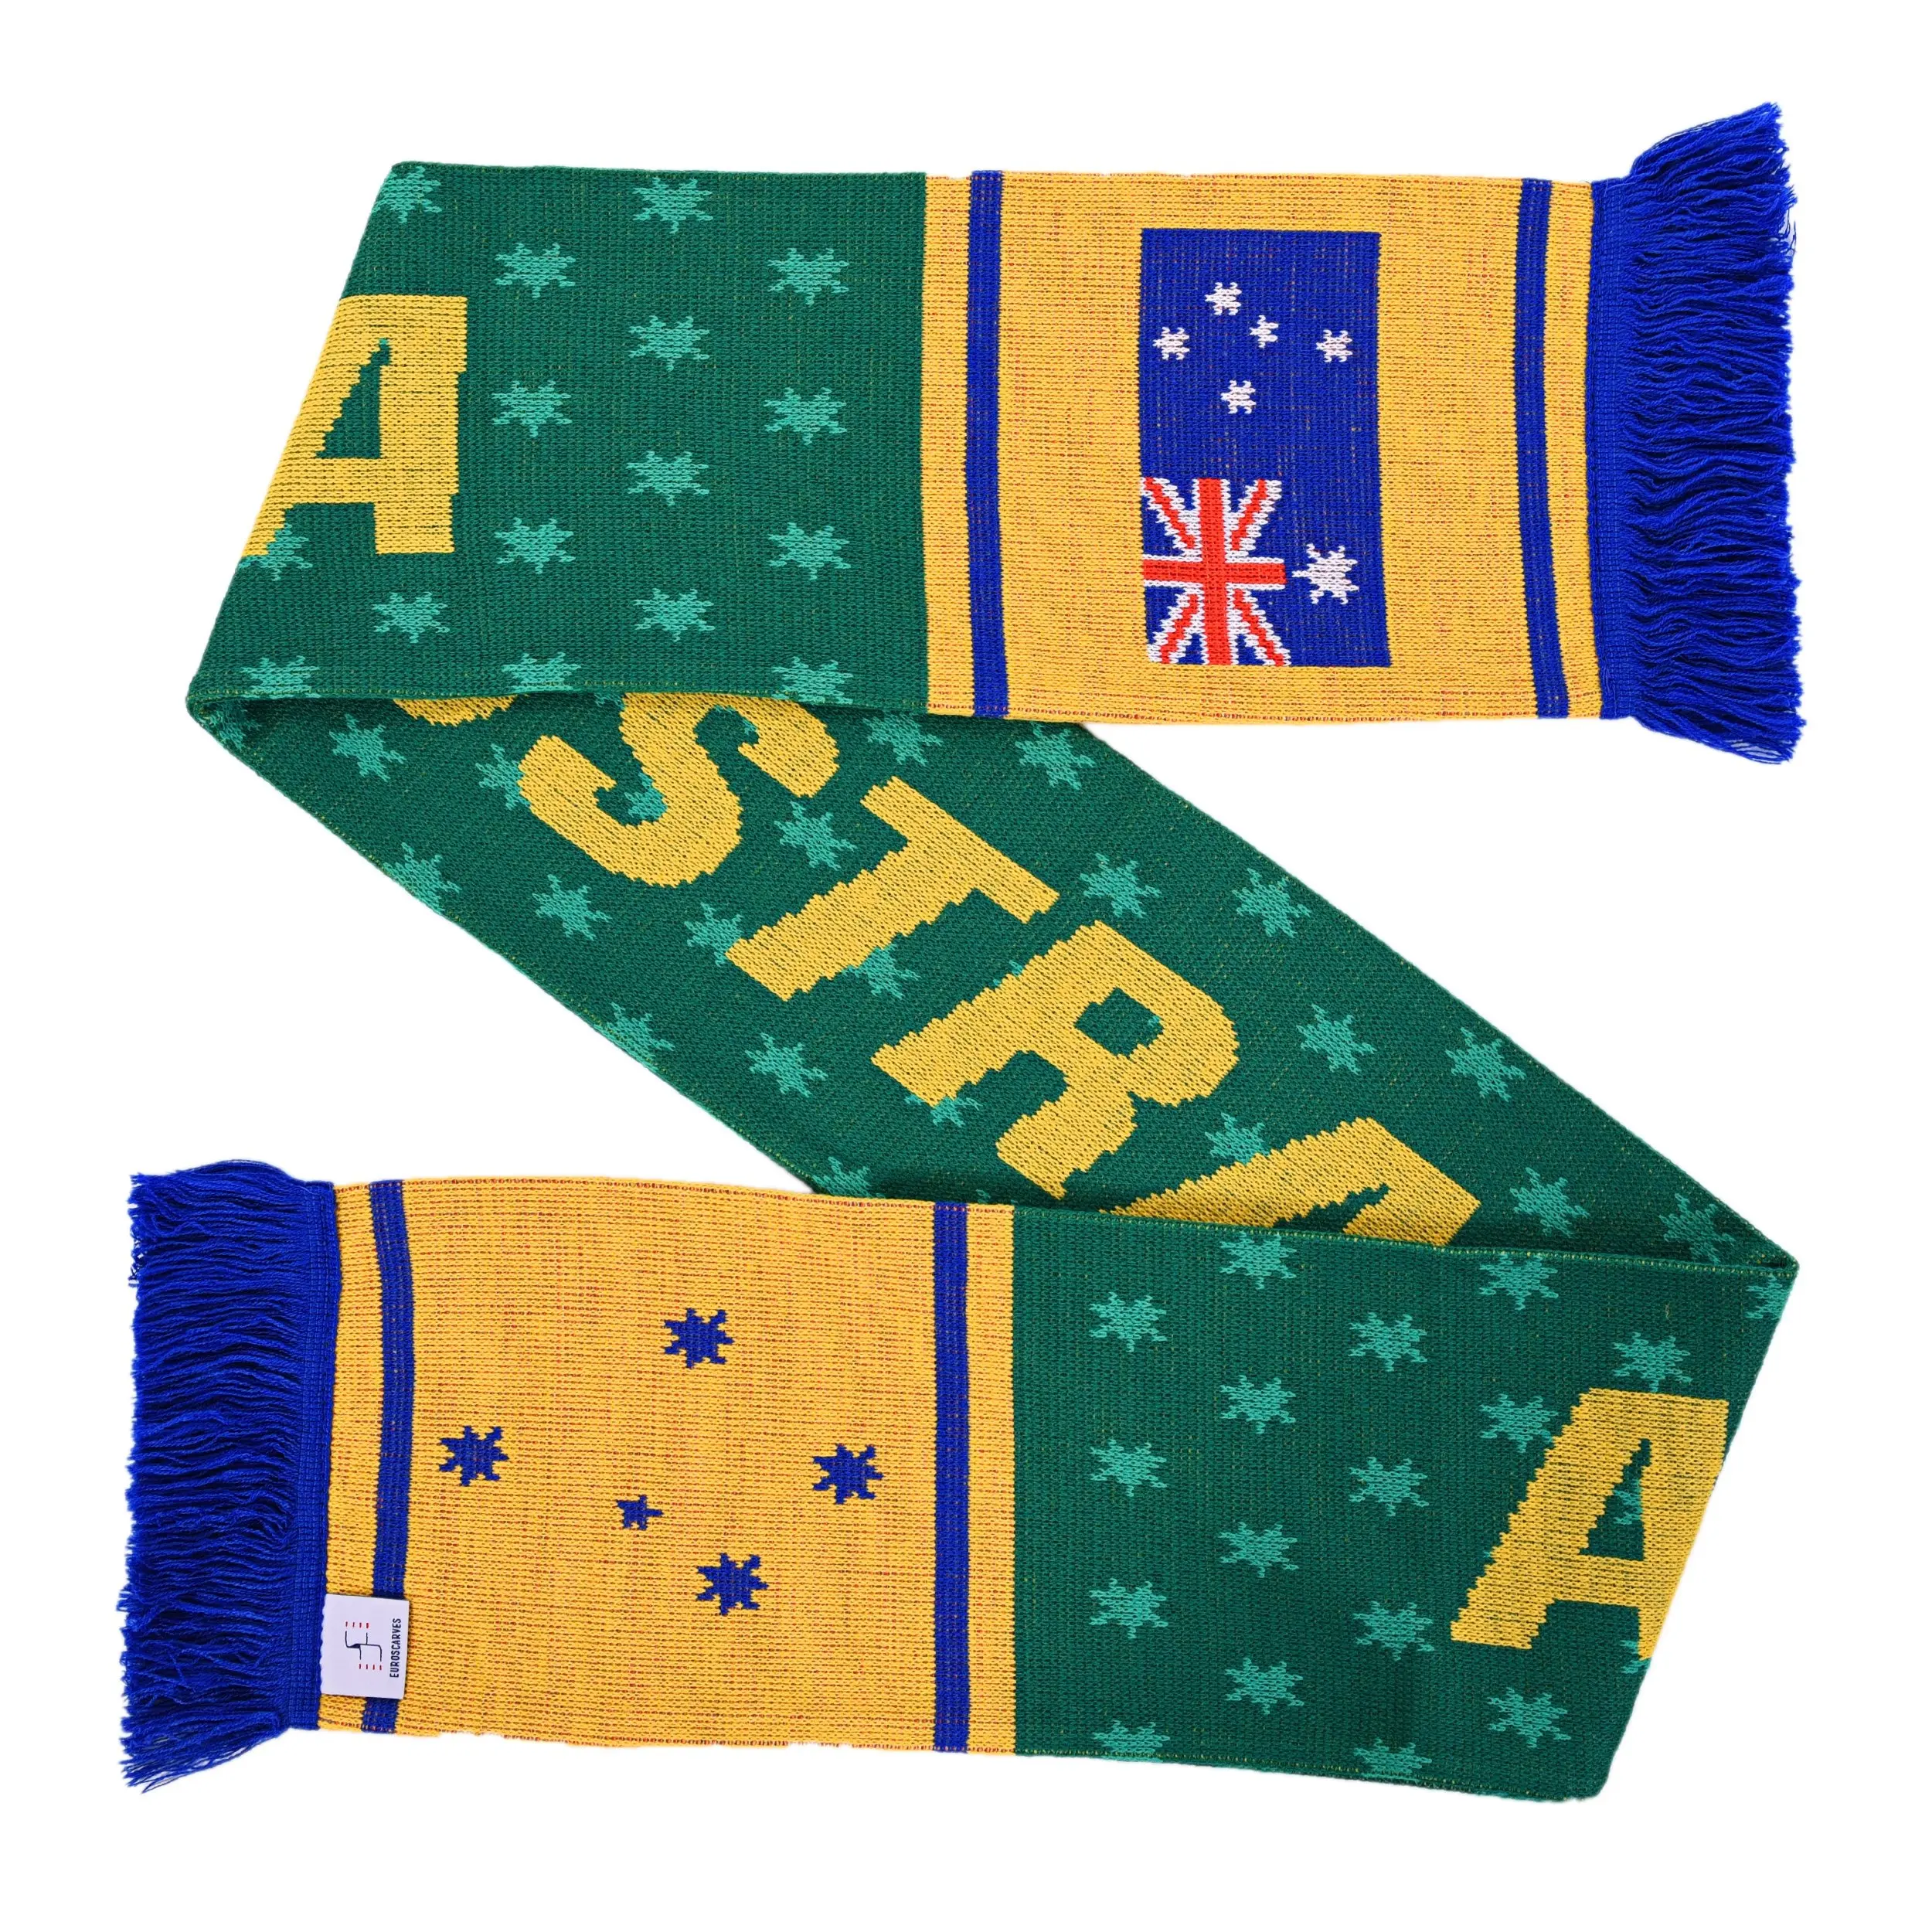 Classic Design Simplicity Football Club Team Double Side Australia Soccer Knit Scarf Winter Scarfs For Soccer Fans